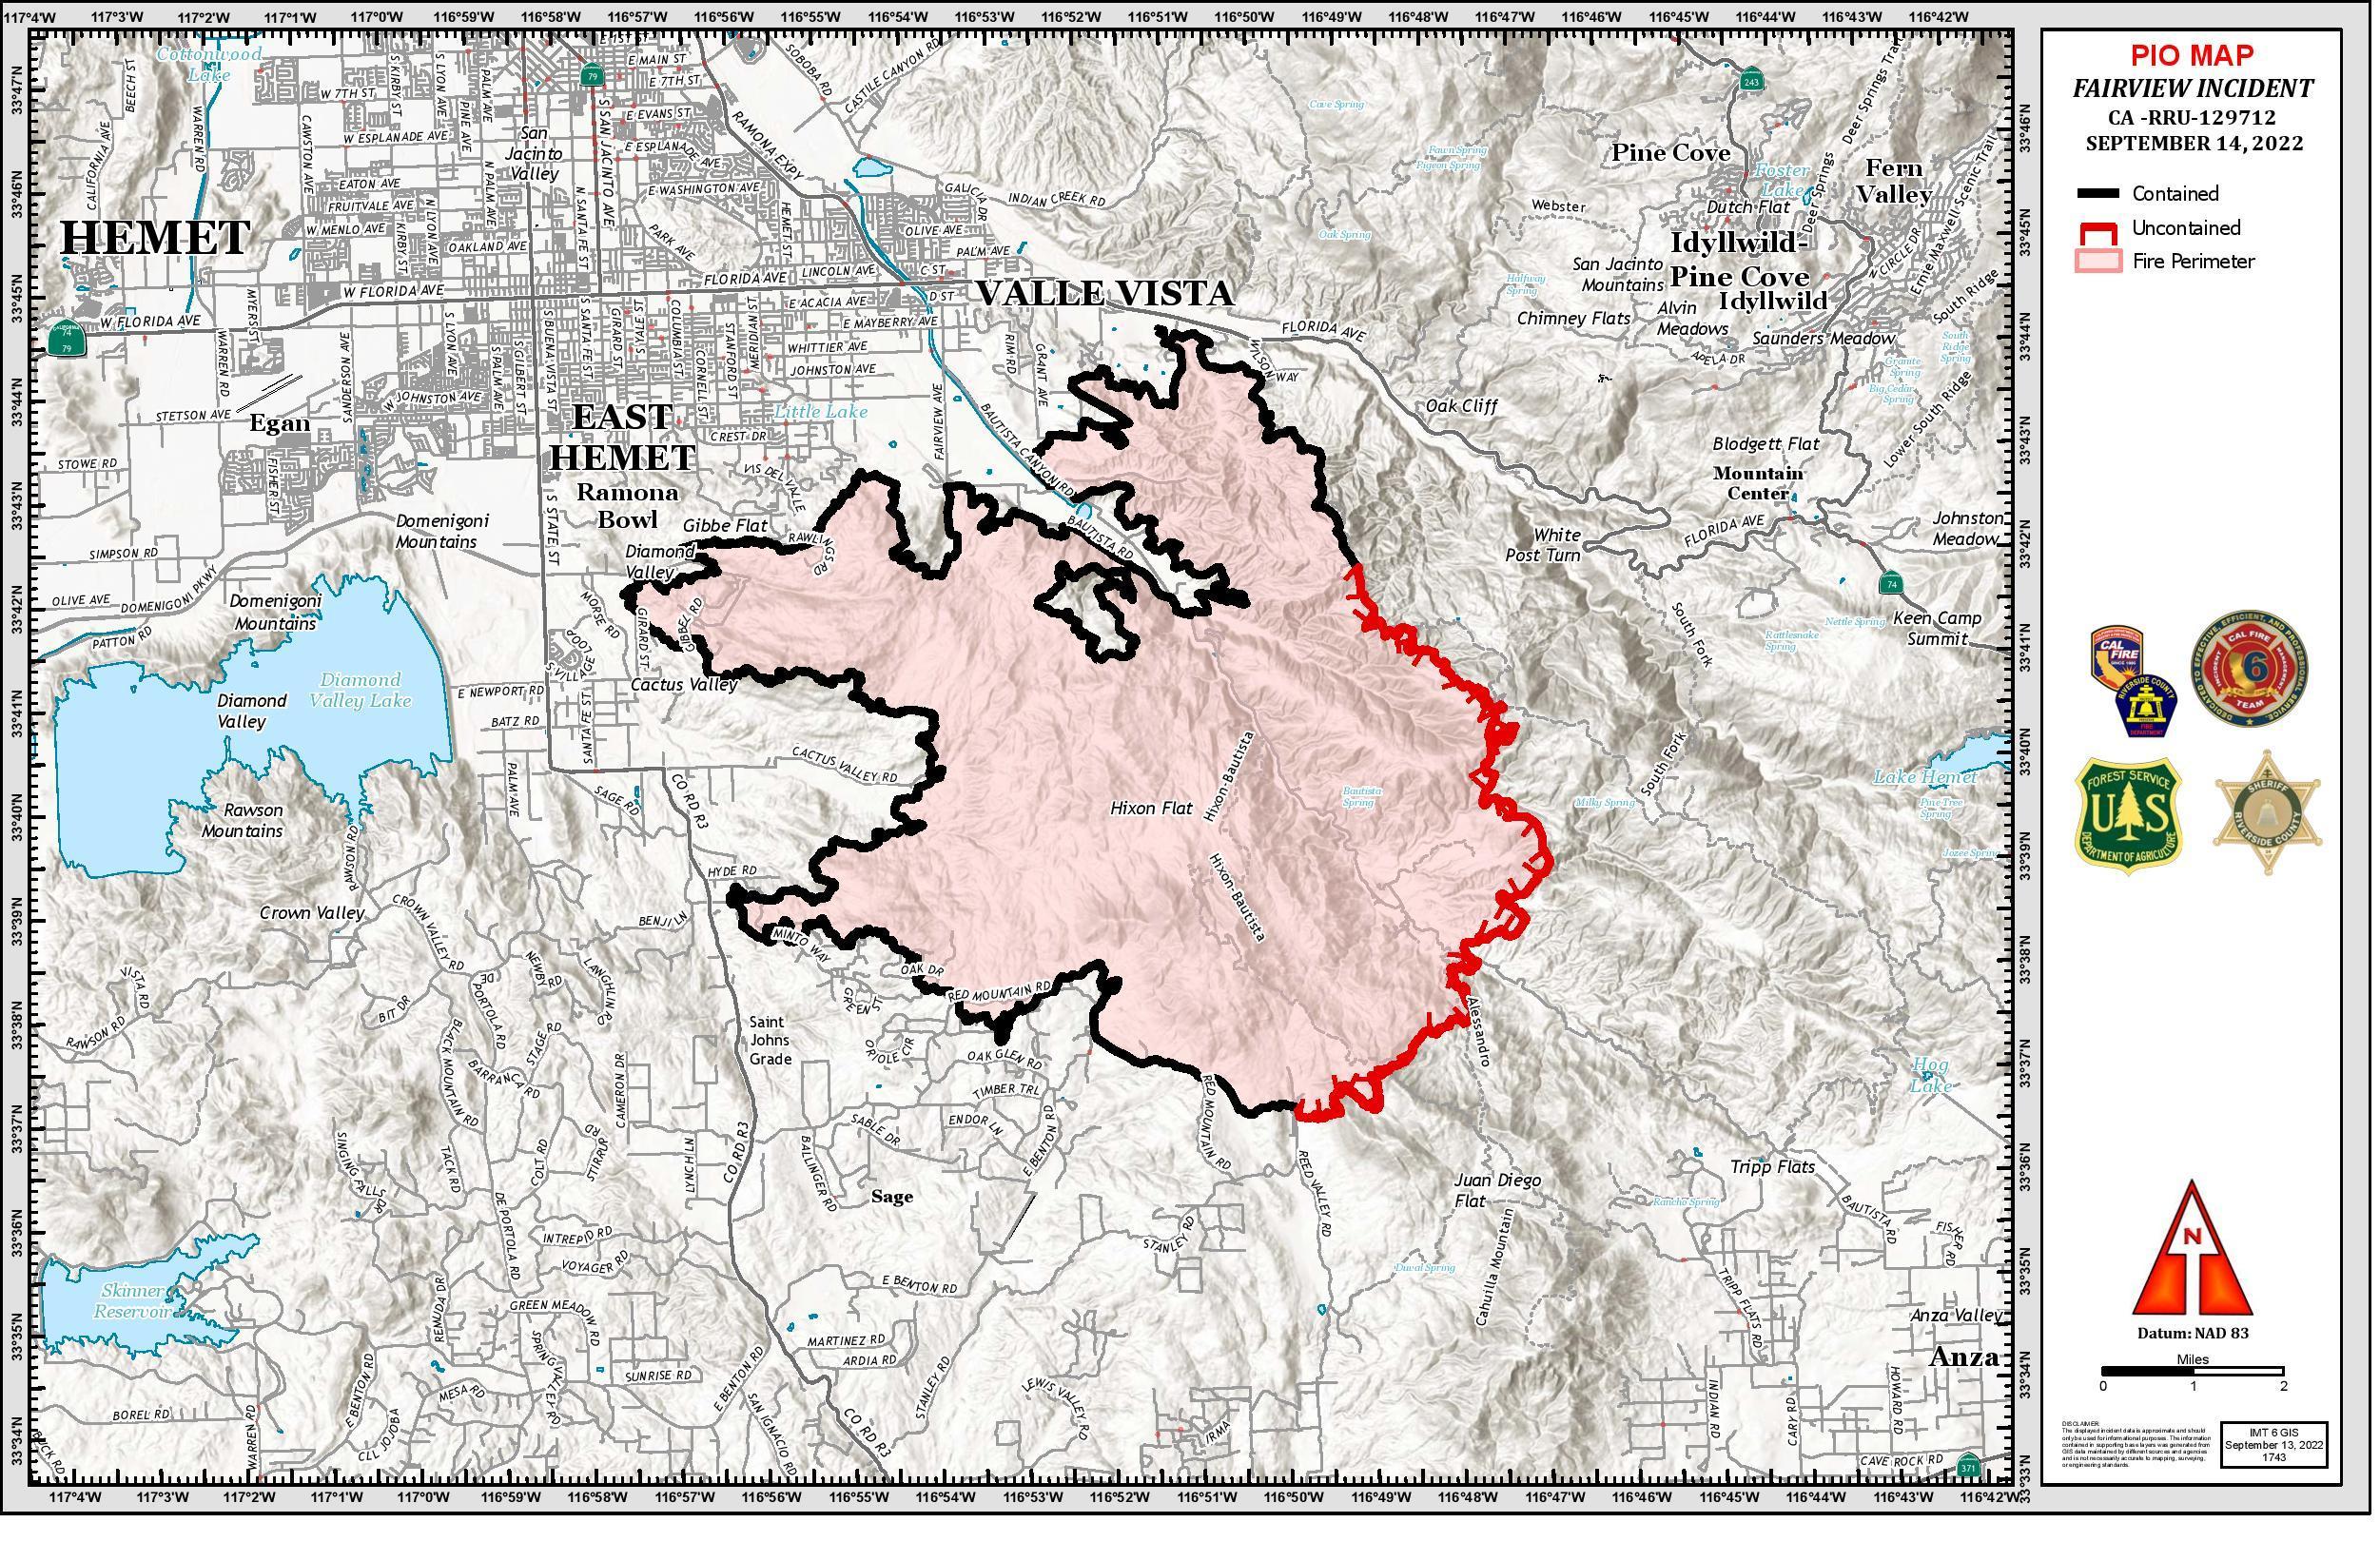 Washburn Fire Public Info Map, Sept 14, 2022